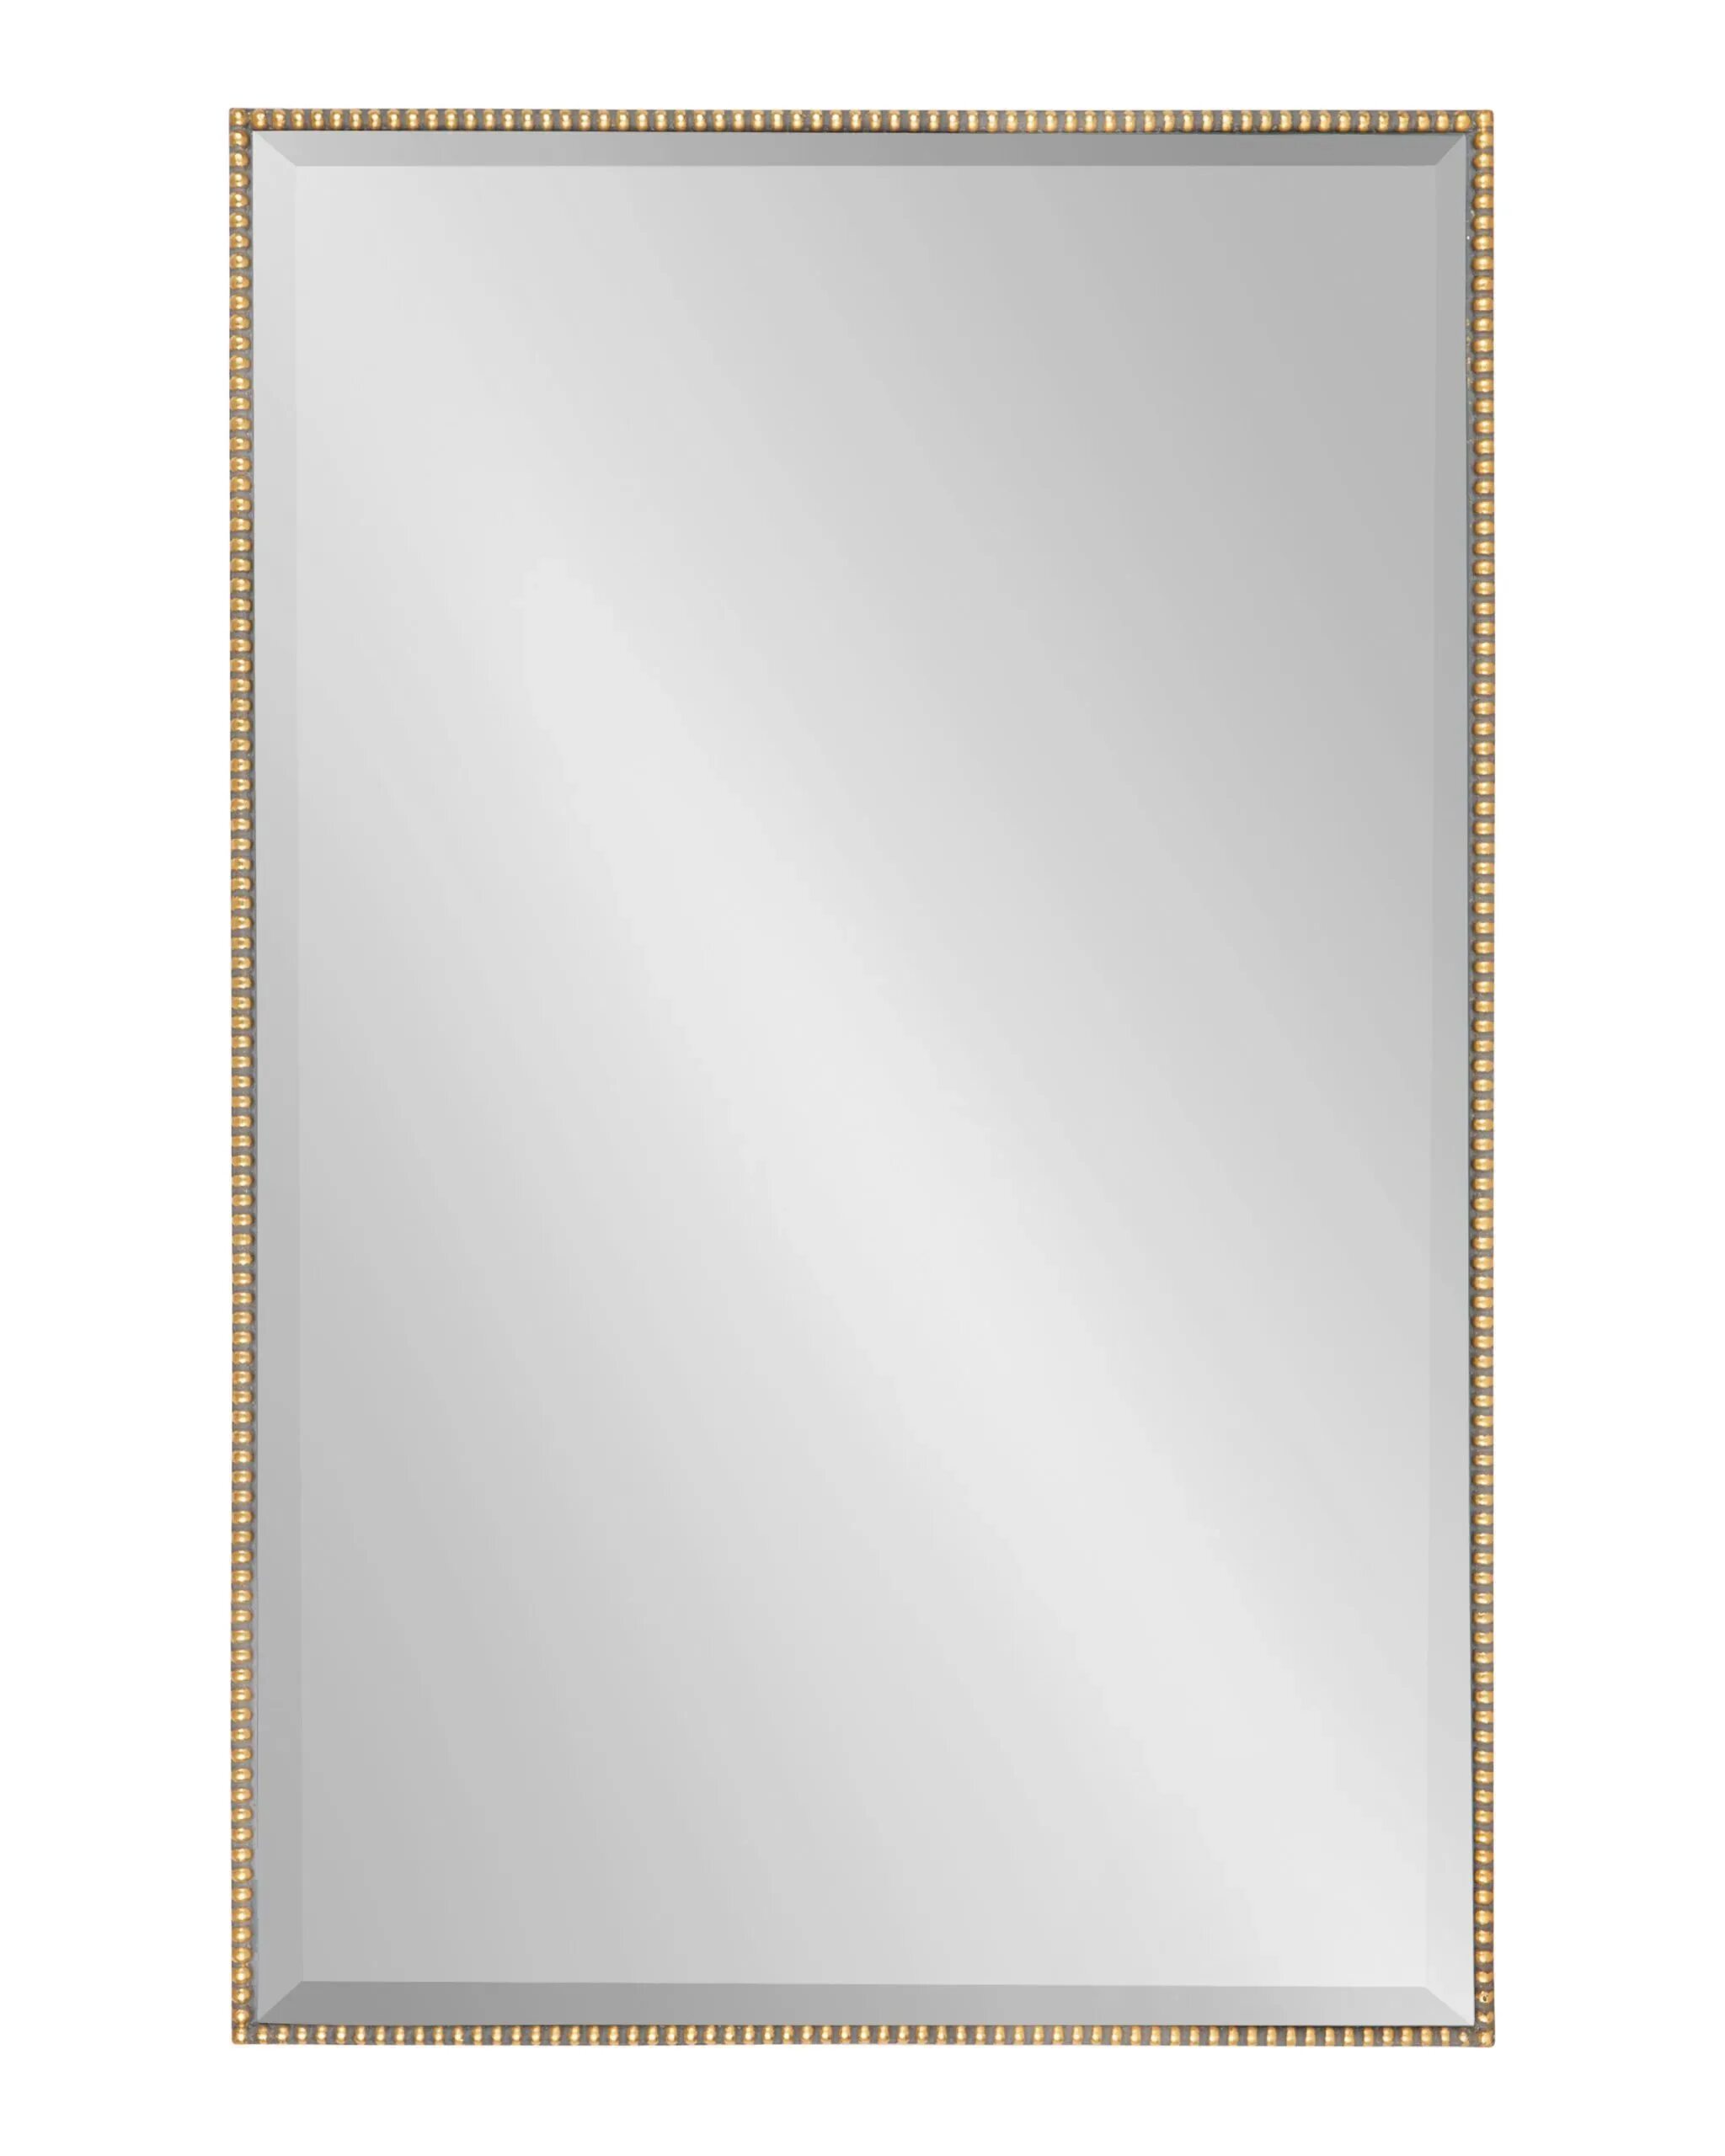 Зеркало LH Mirror Home Леннокс bd-316975. Зеркало настенное, 60 см х 80 см AGC. Зеркало прямоугольное в раме. Зеркало прямоугольное настенное в раме.